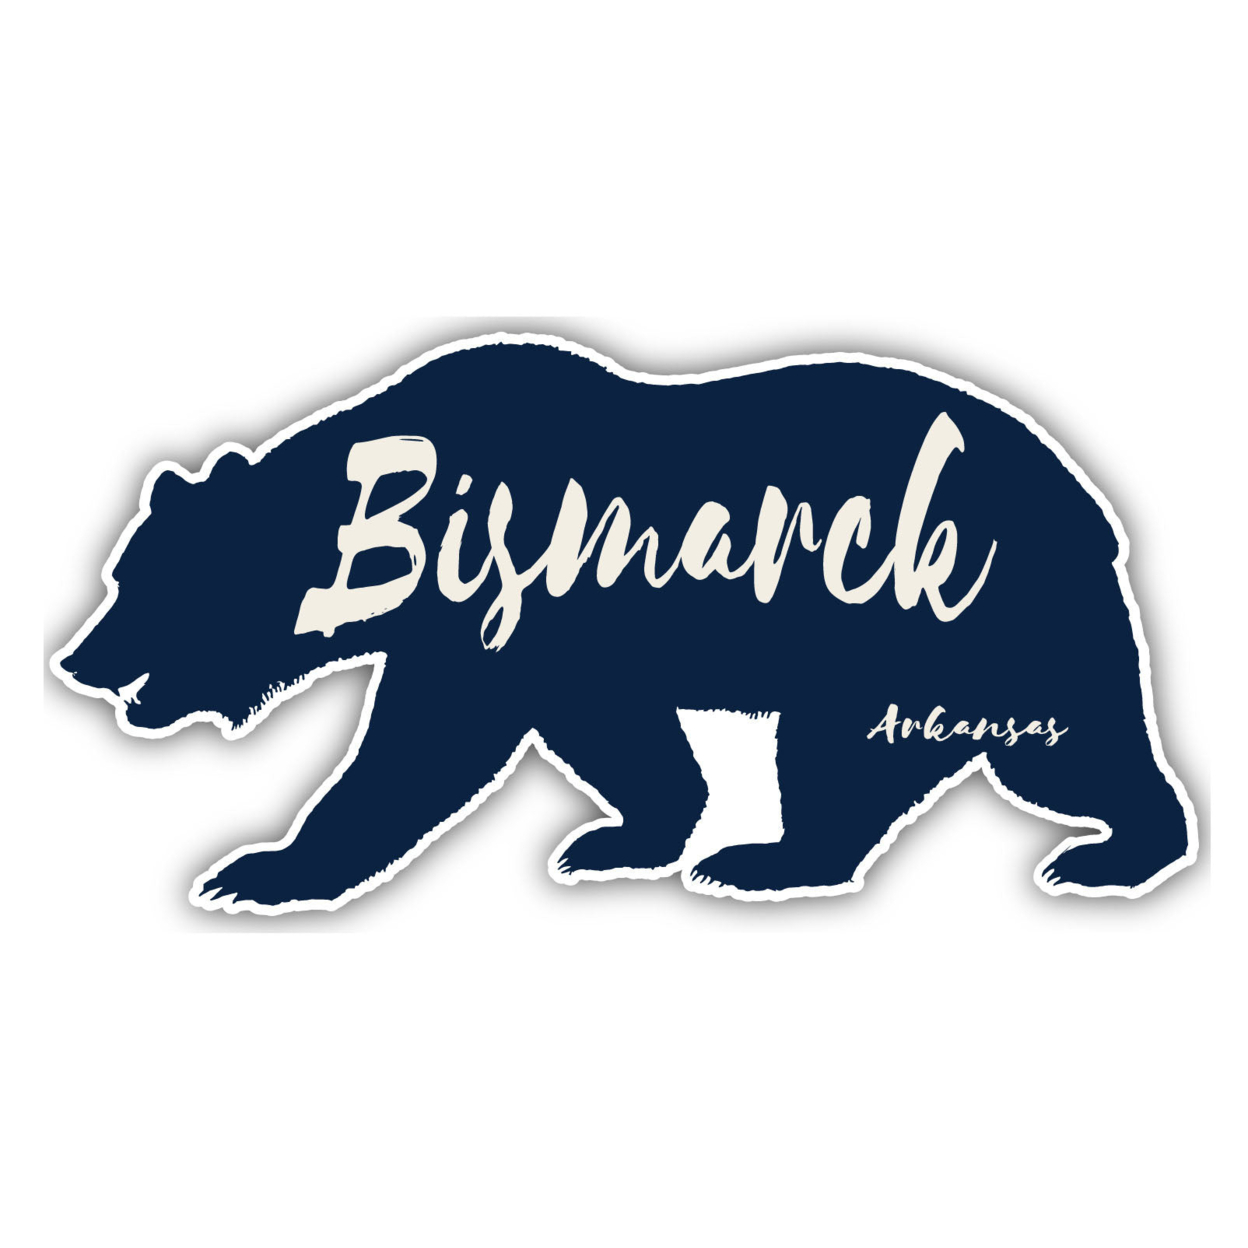 Bismarck Arkansas Souvenir Decorative Stickers (Choose Theme And Size) - Single Unit, 8-Inch, Bear